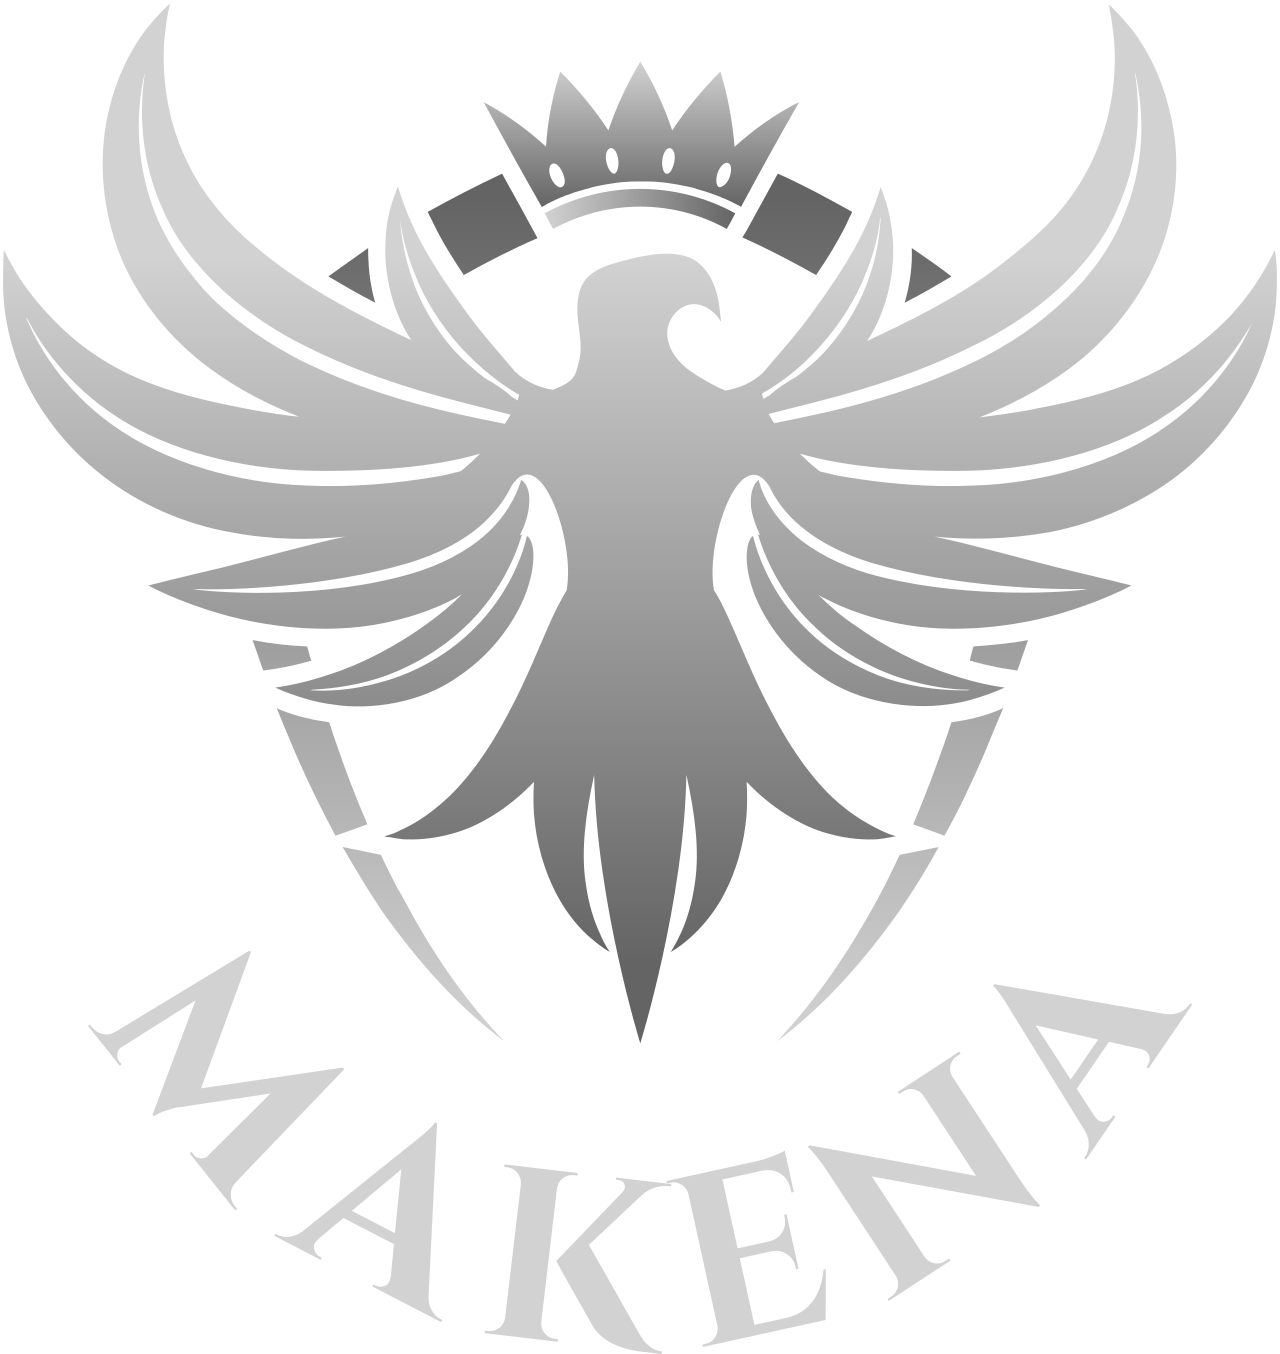 MaKeNa's logo